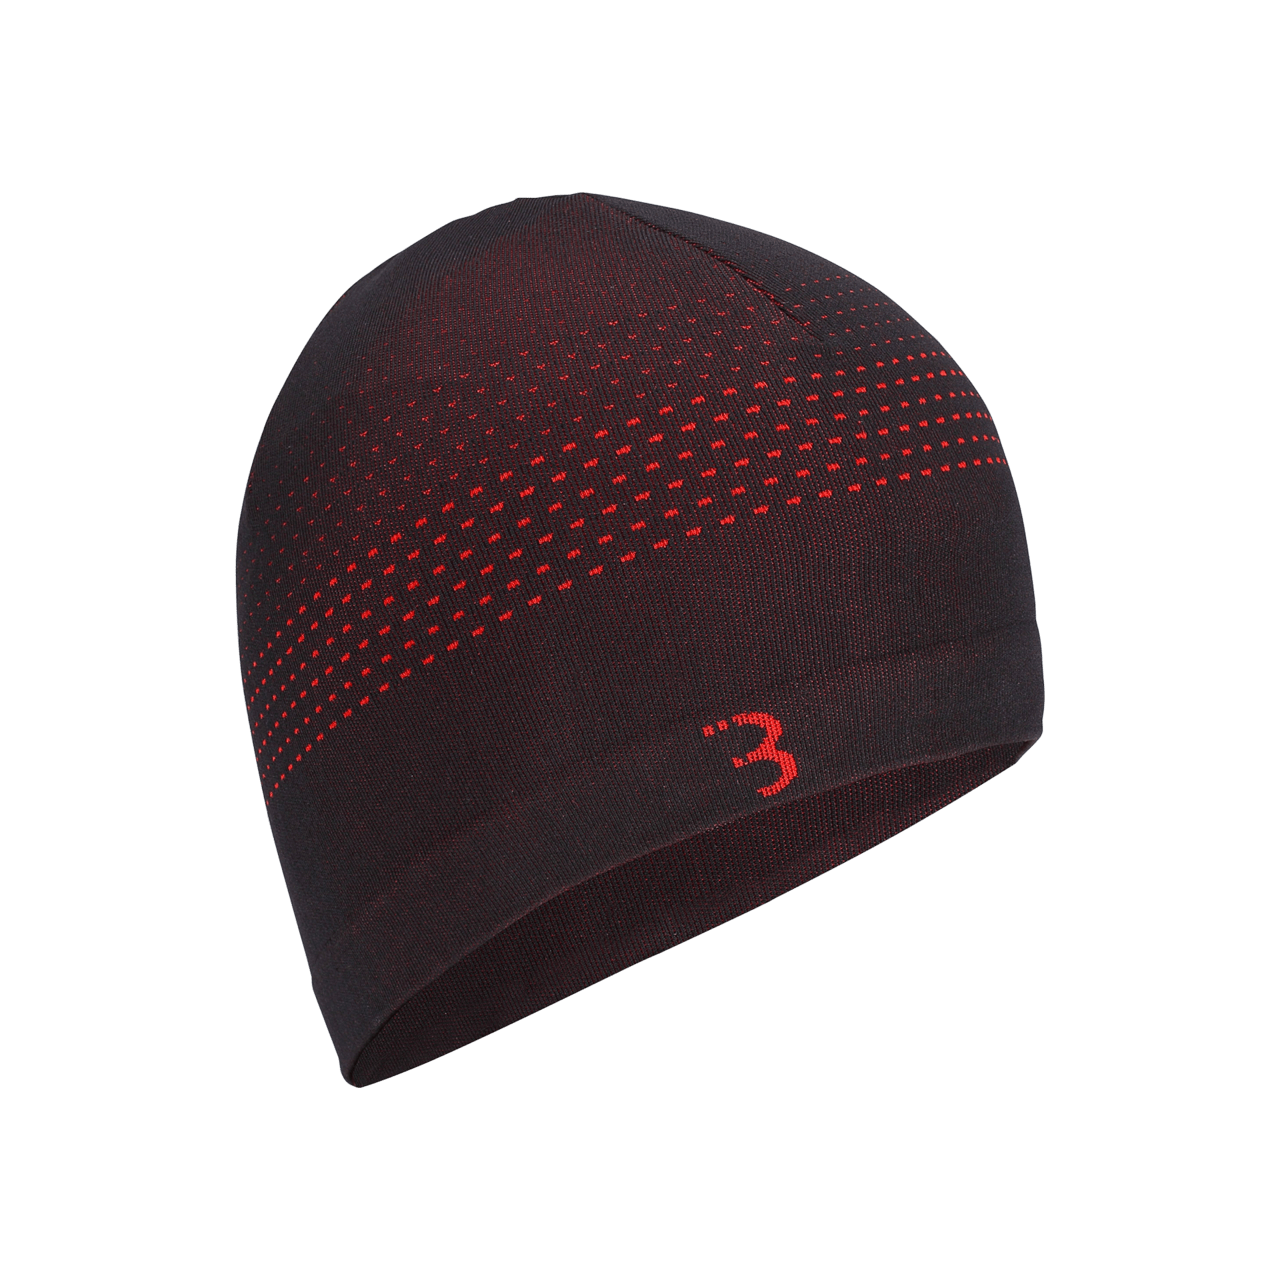 BBB Cycling BBW-494 FIRHat cycling winter cap, black